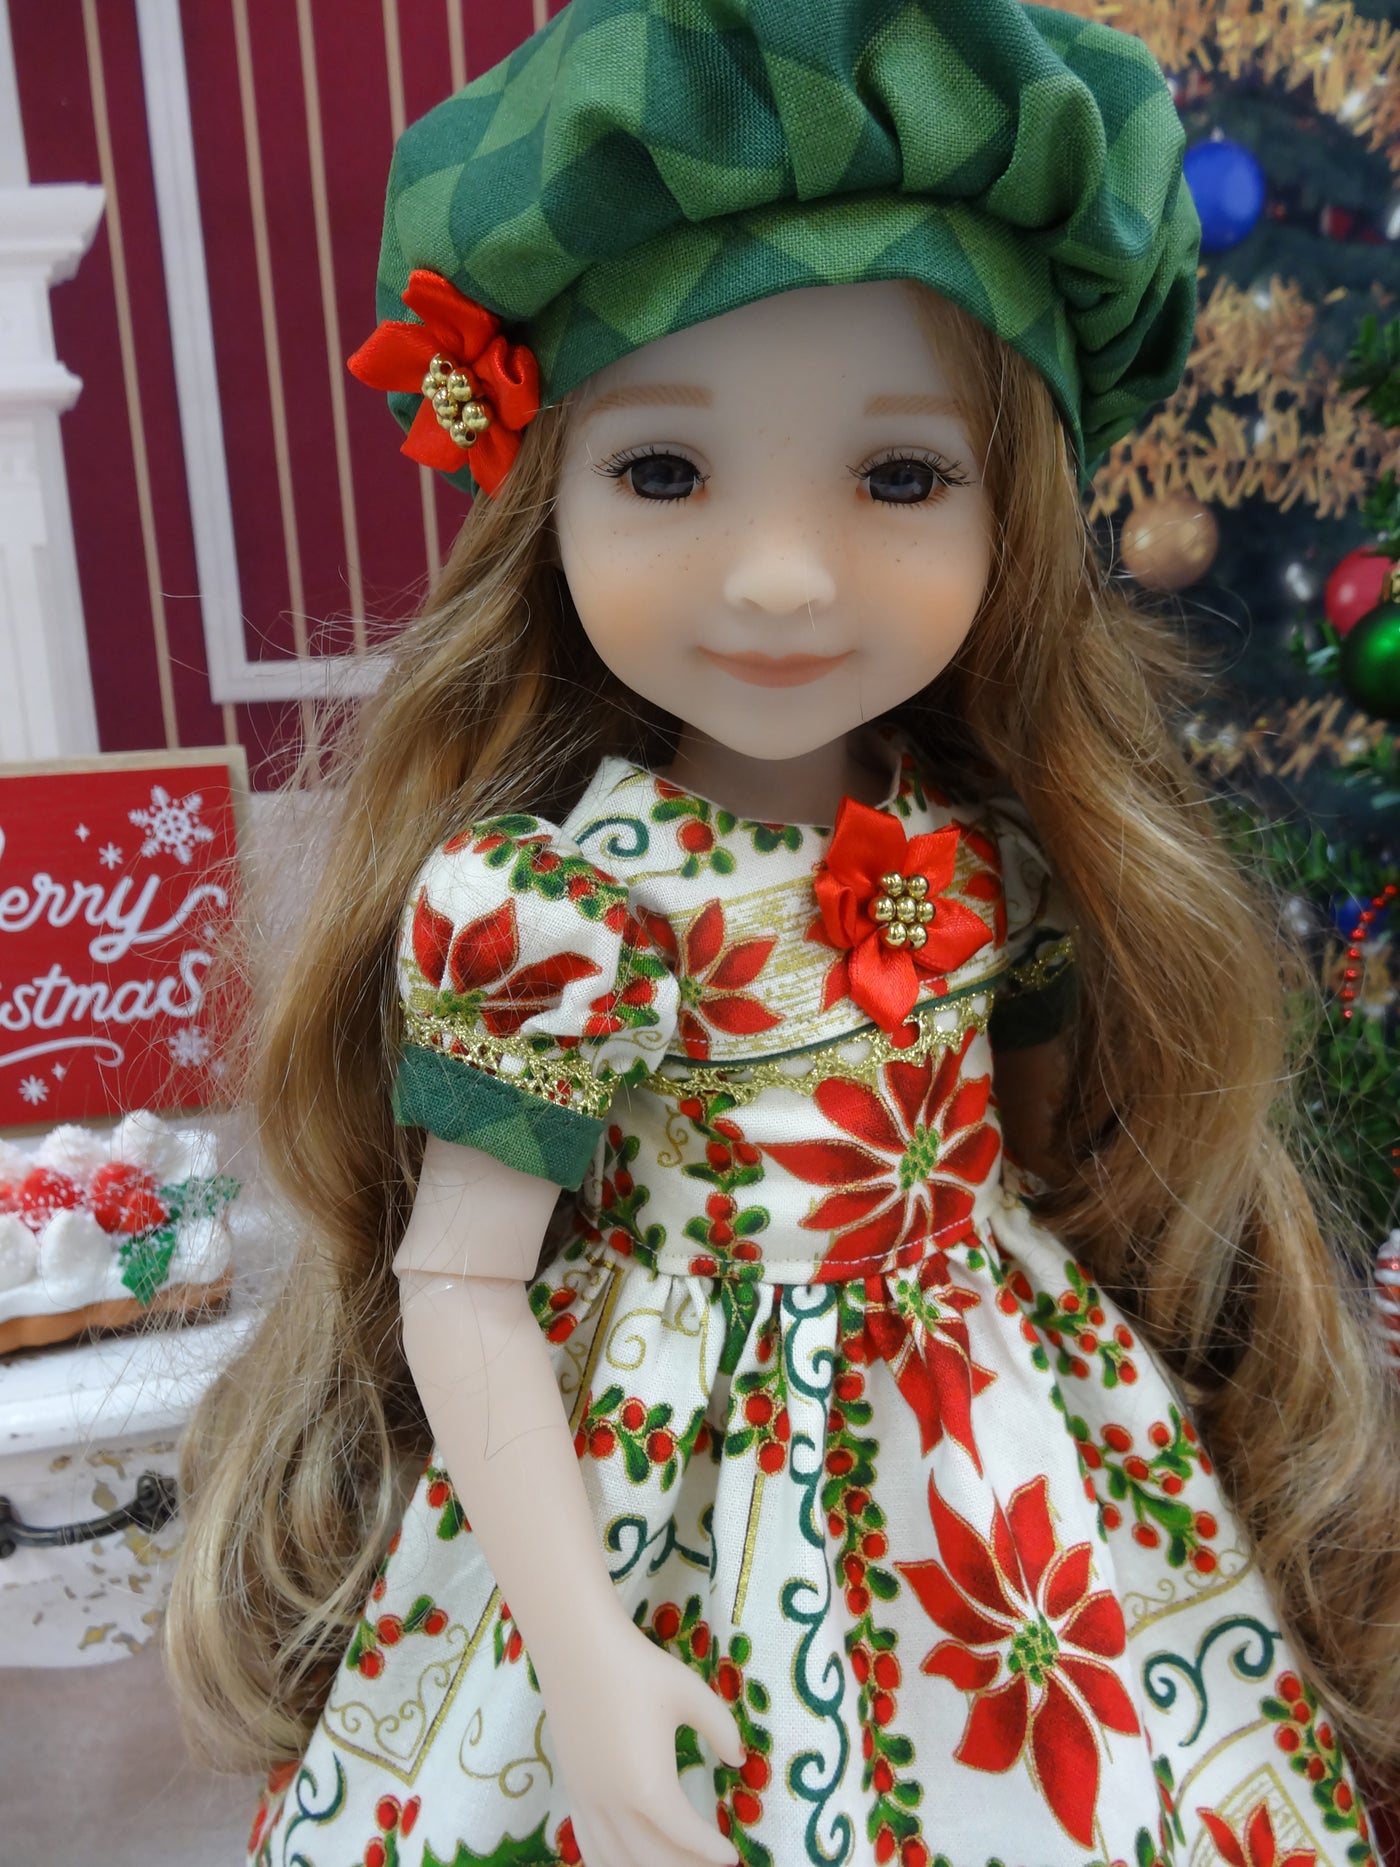 Splendid Poinsettia - dress ensemble for Ruby Red Fashion Friends doll